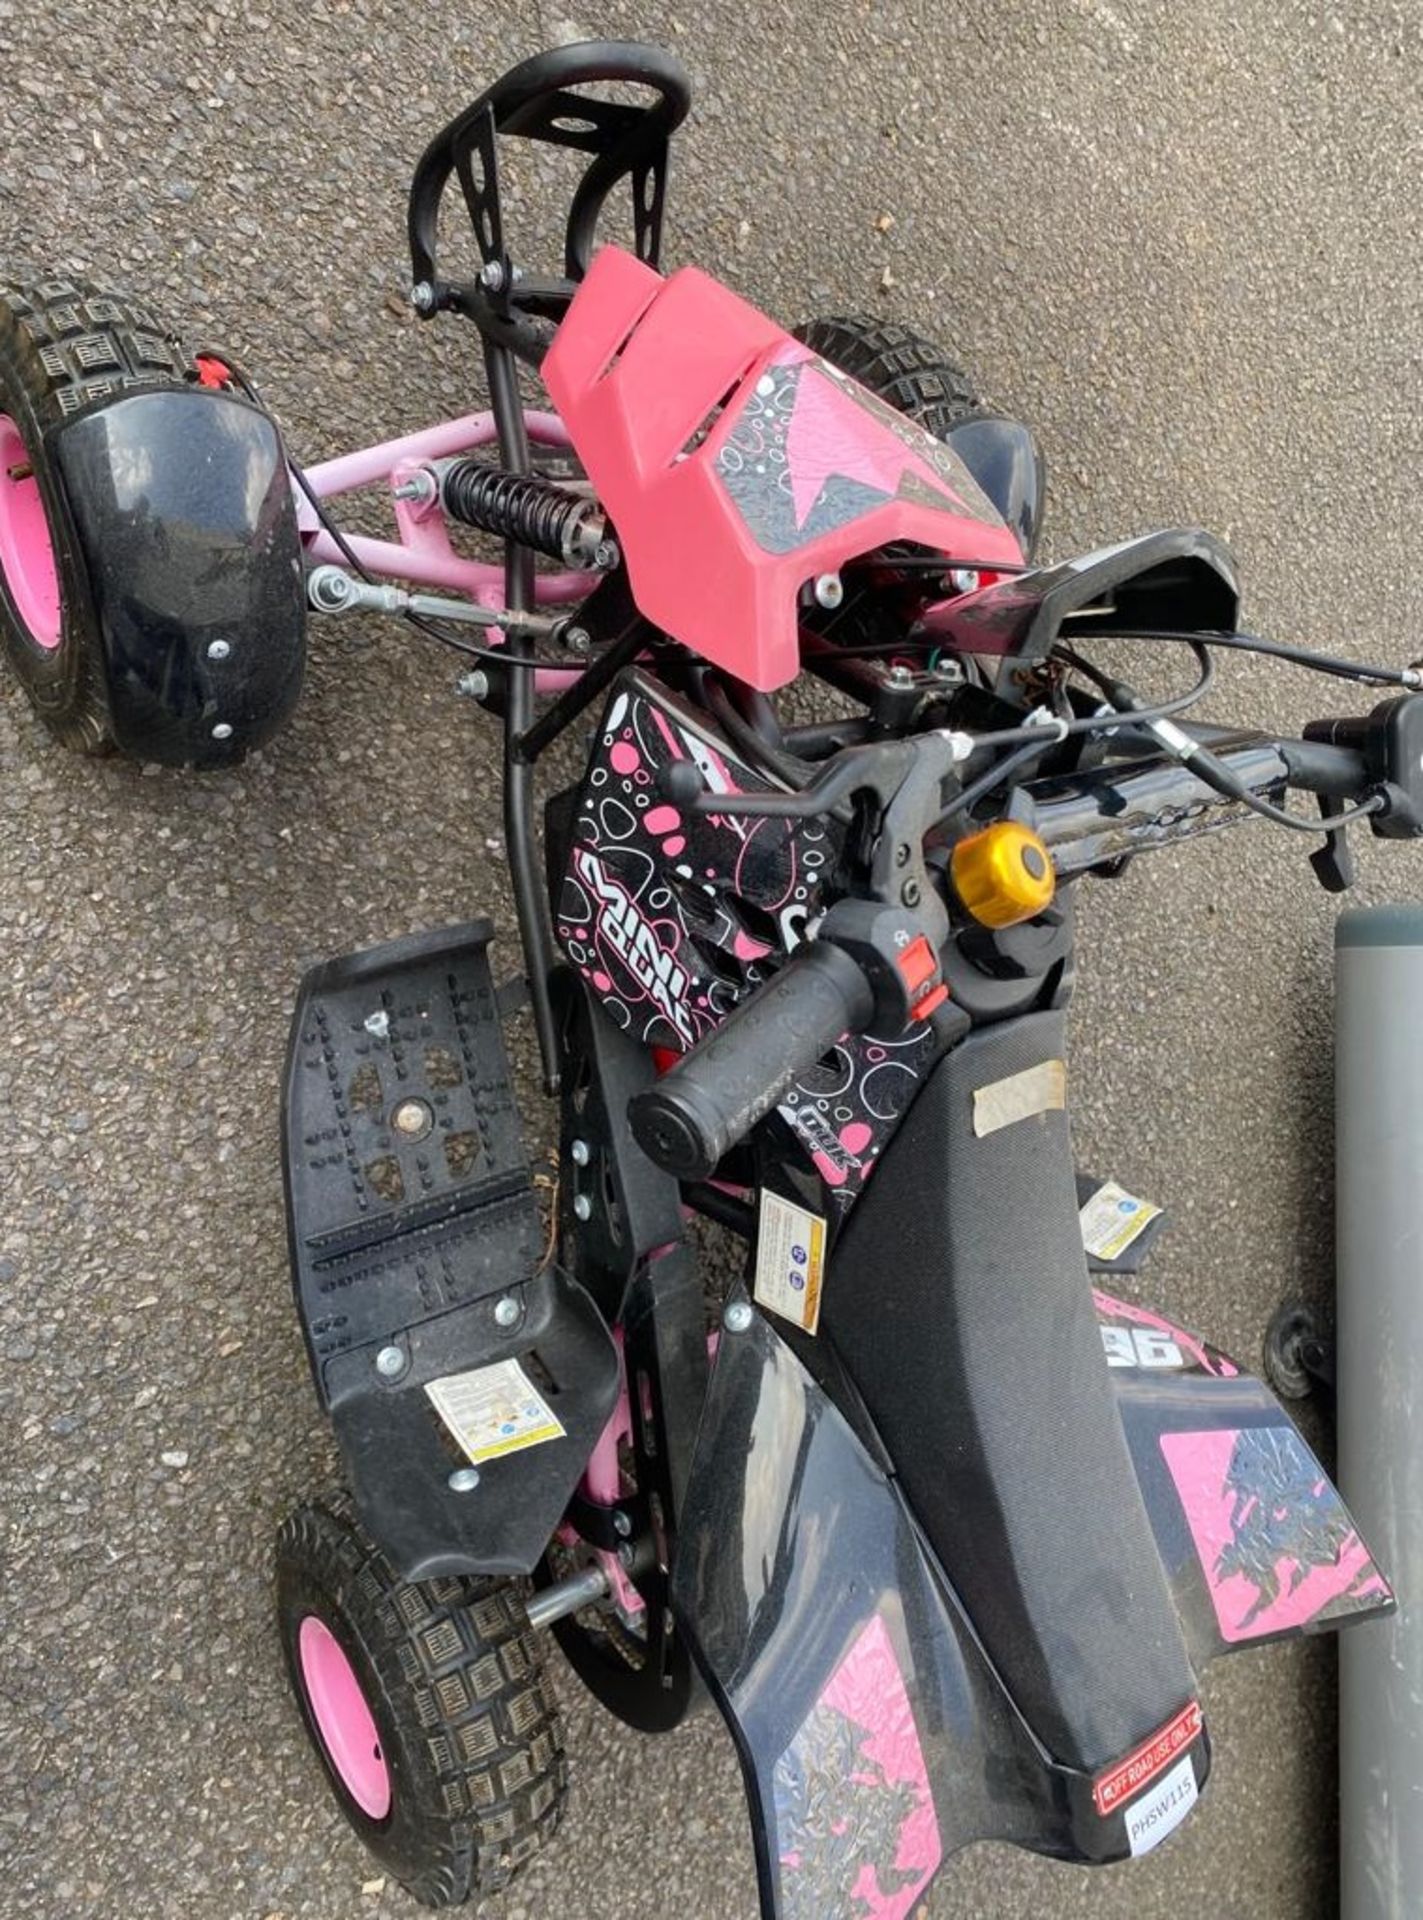 1 x Mini Quad Bike With Petrol Engine - Pink Colour - Image 5 of 5